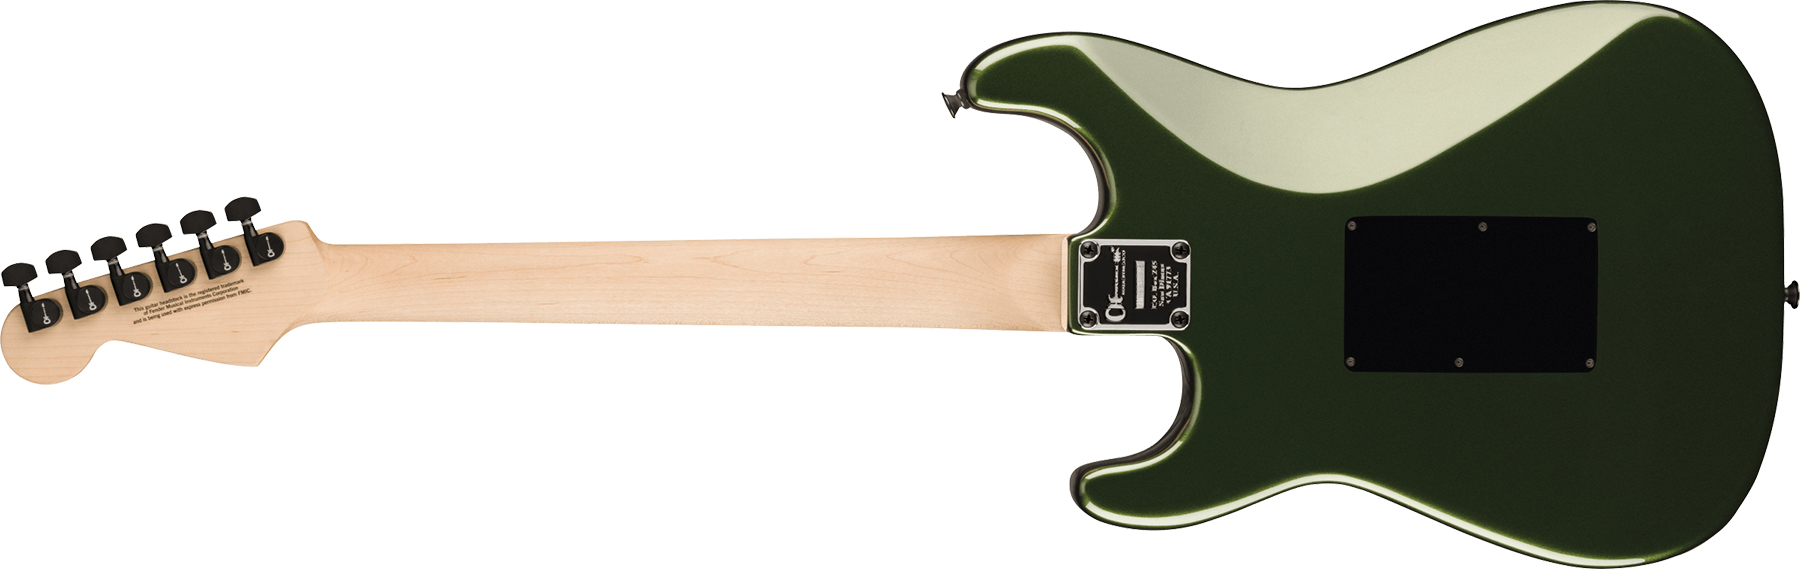 Charvel So-cal Style 1 Hss Fr E Pro-mod Seymour Duncan Eb - Lambo Green - Guitare Électrique Forme Str - Variation 1